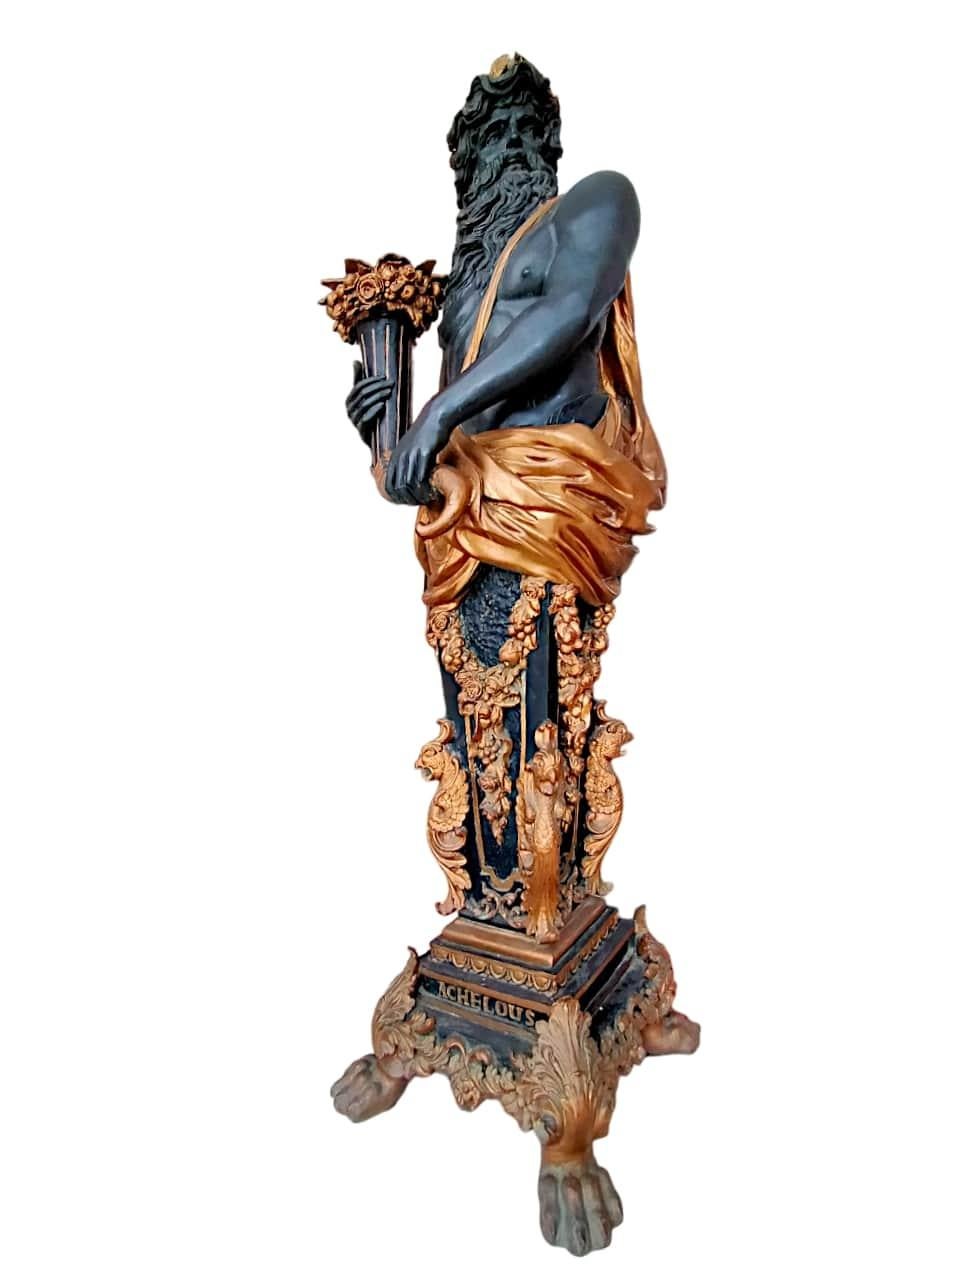 European Important and Impressive Pair of 19th Century Bronze Sculptures For Sale